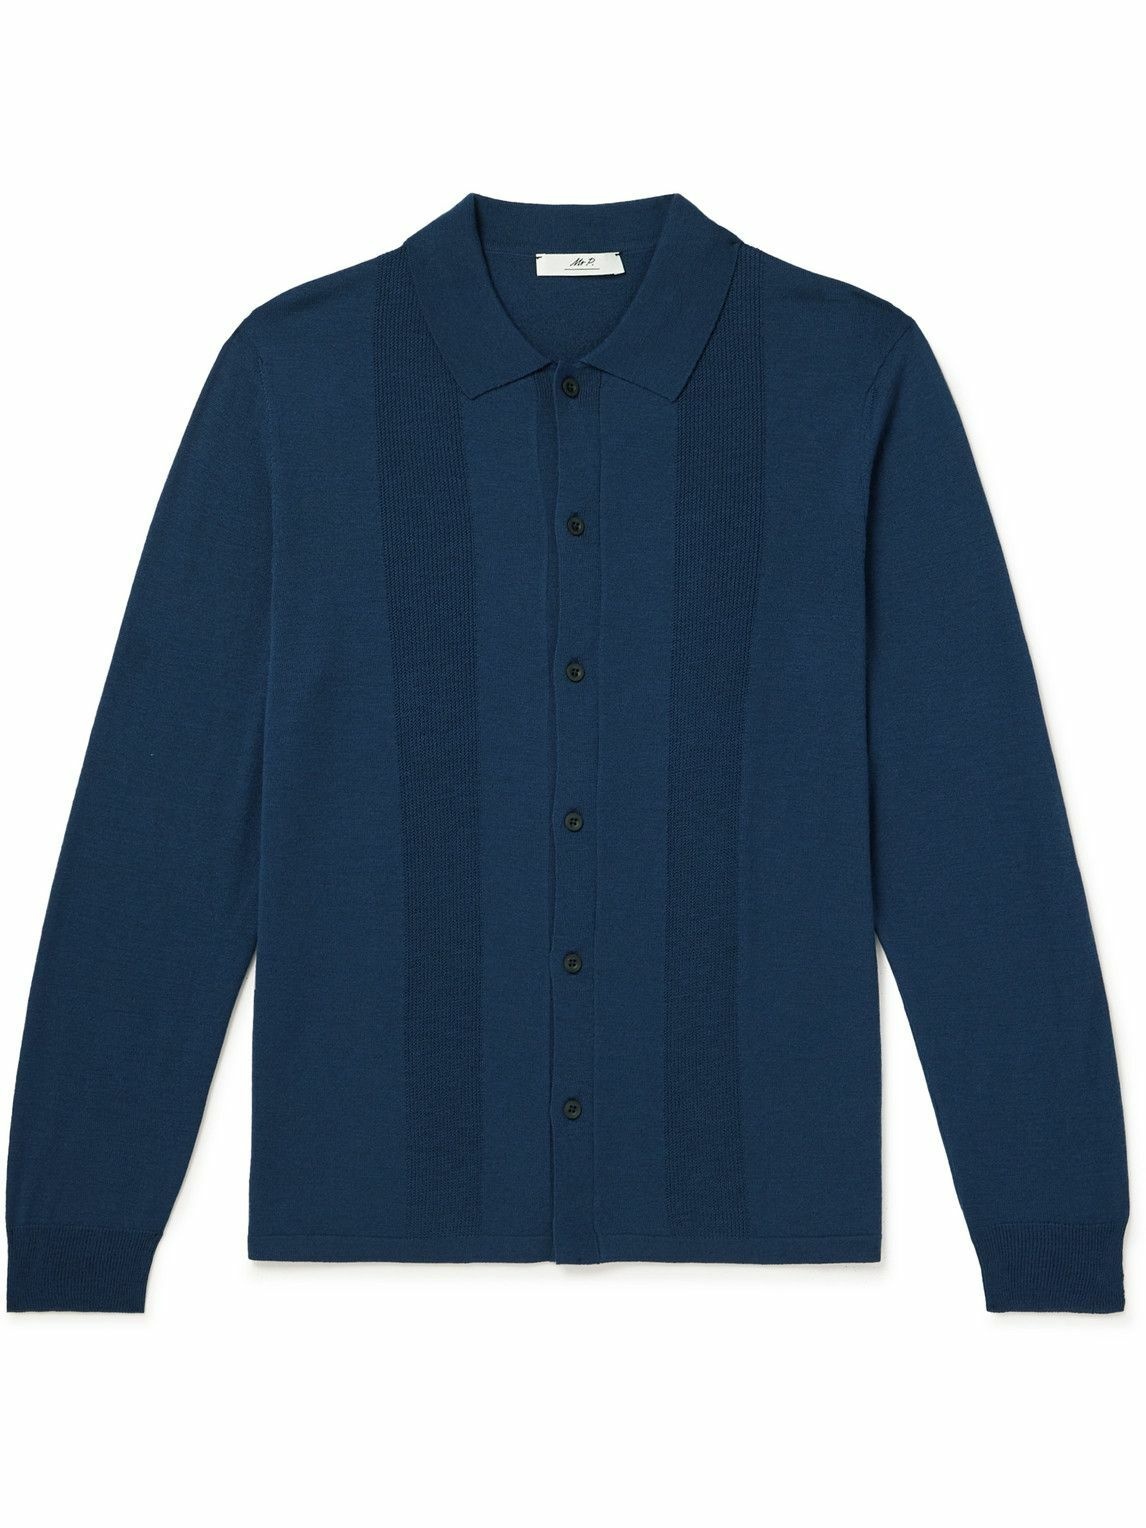 Mr P. - Merino Wool-Jacquard Shirt - Blue Mr P.